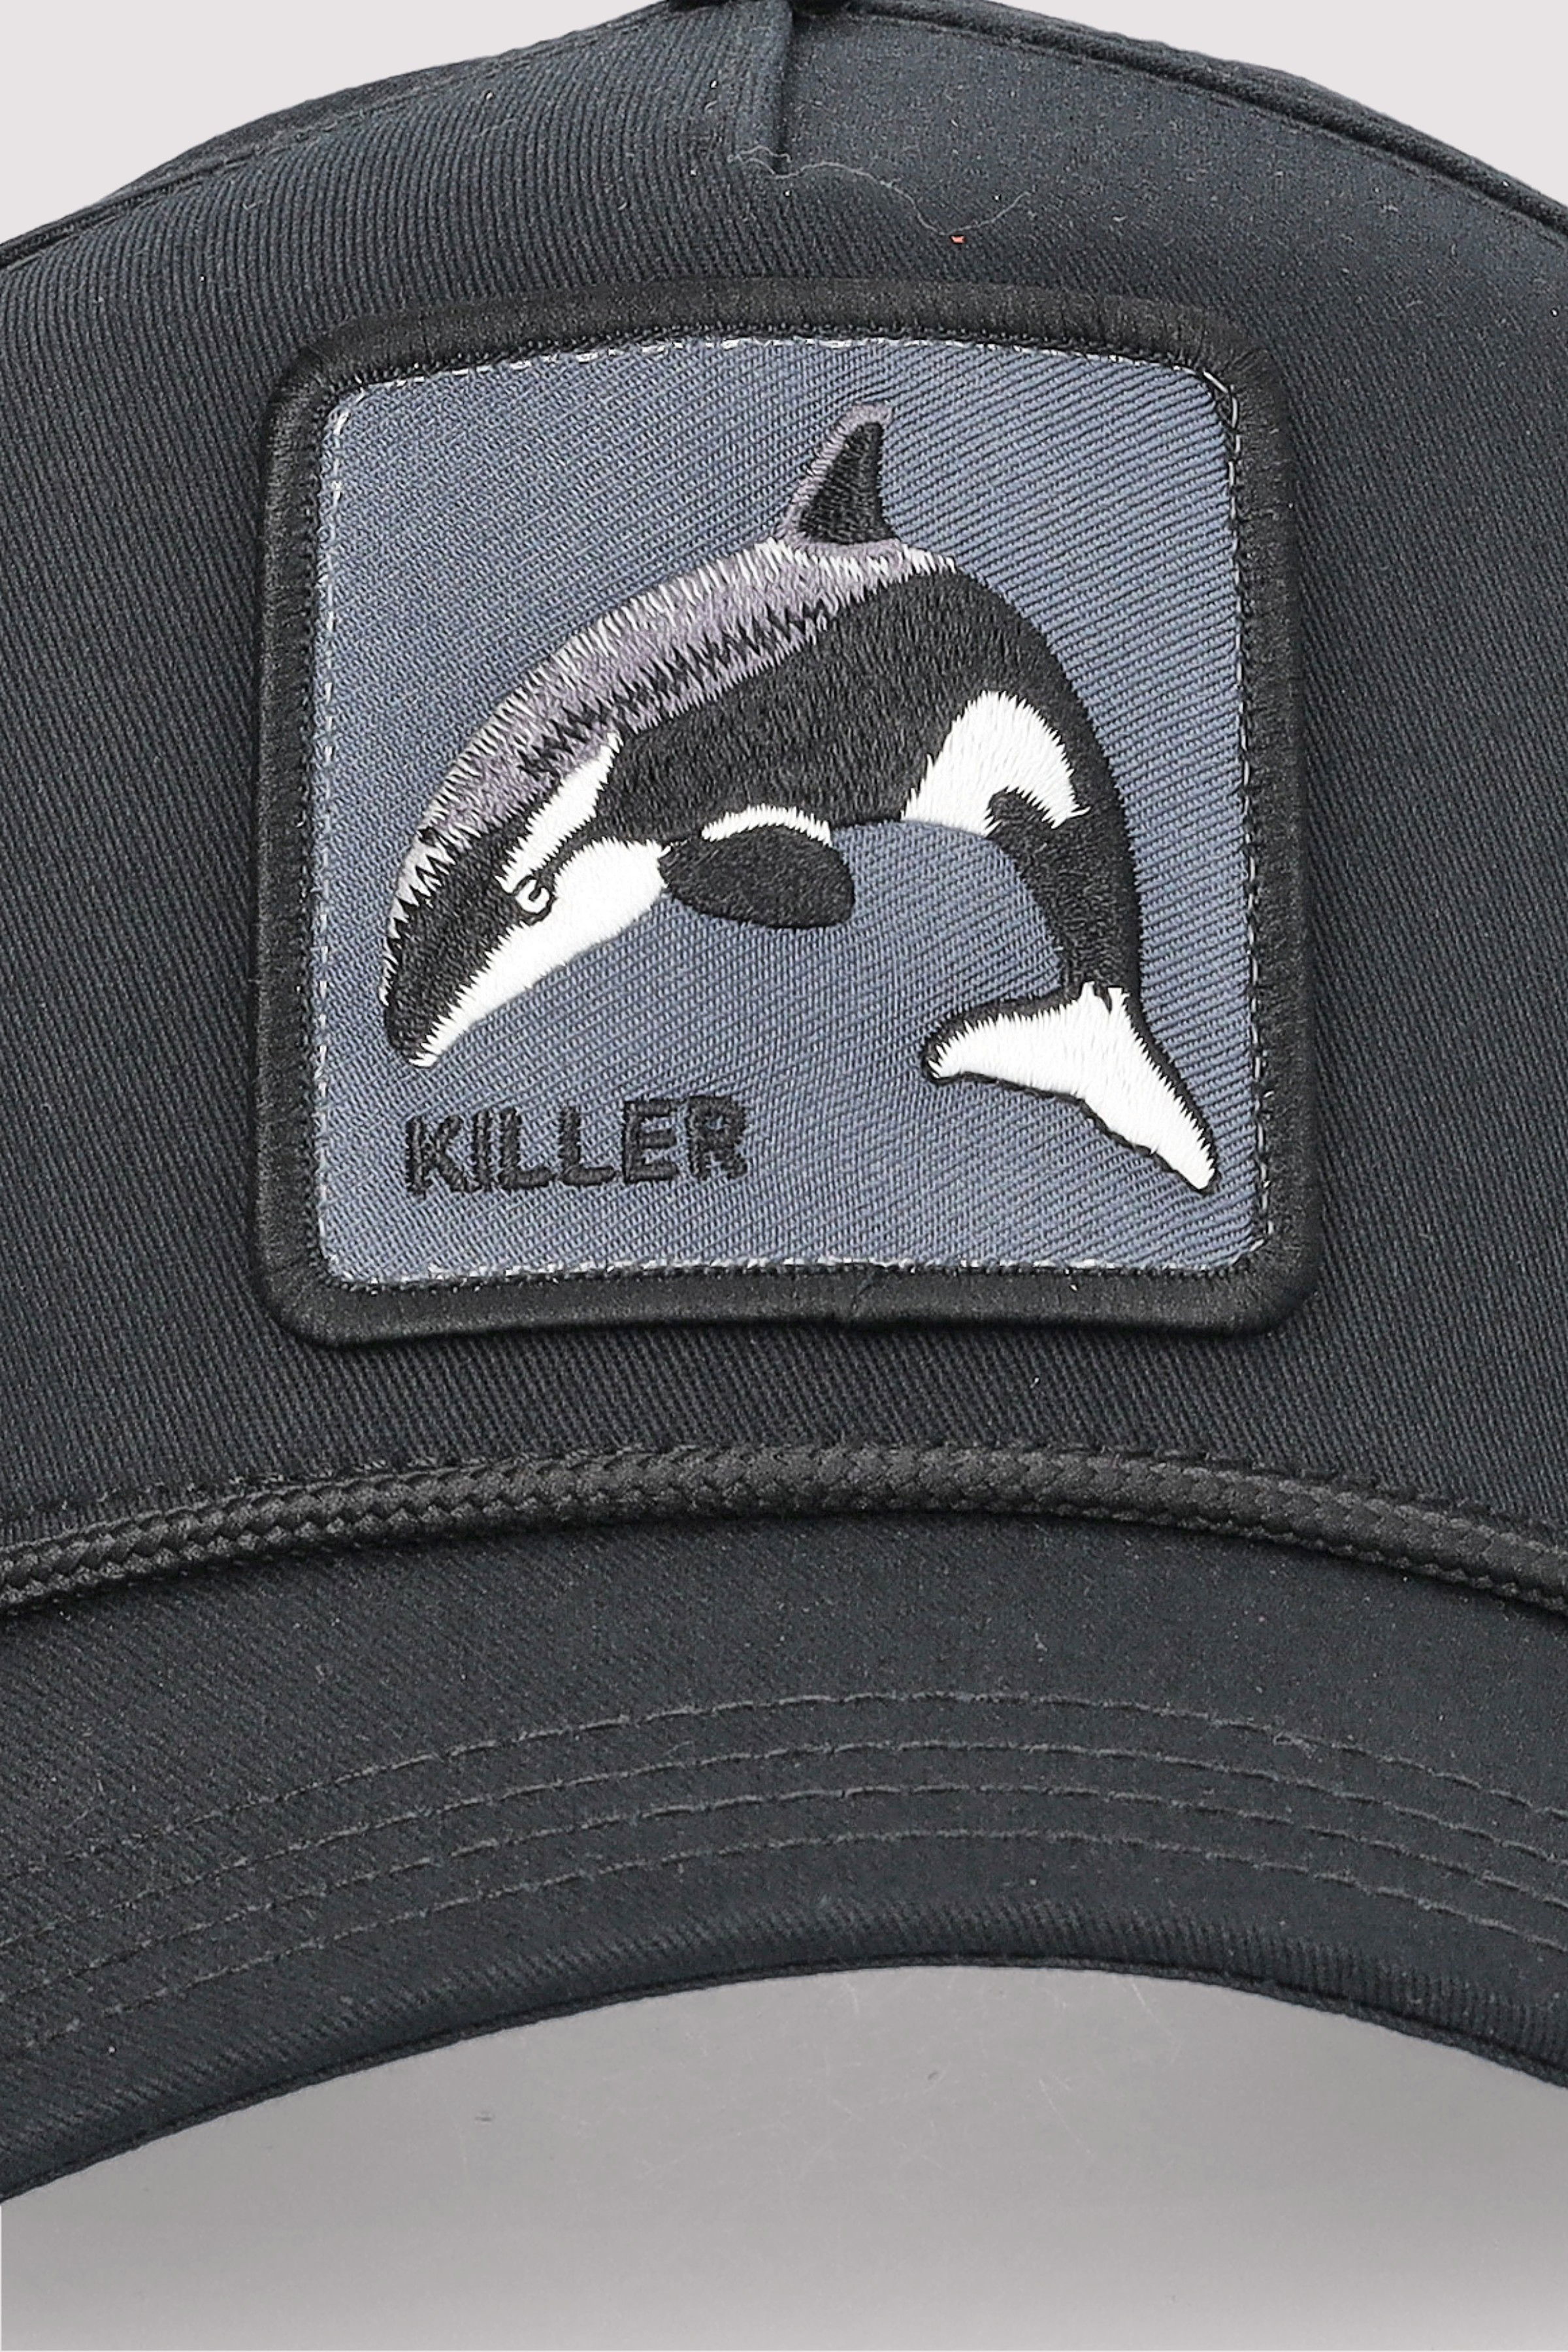 Killer Whale 100